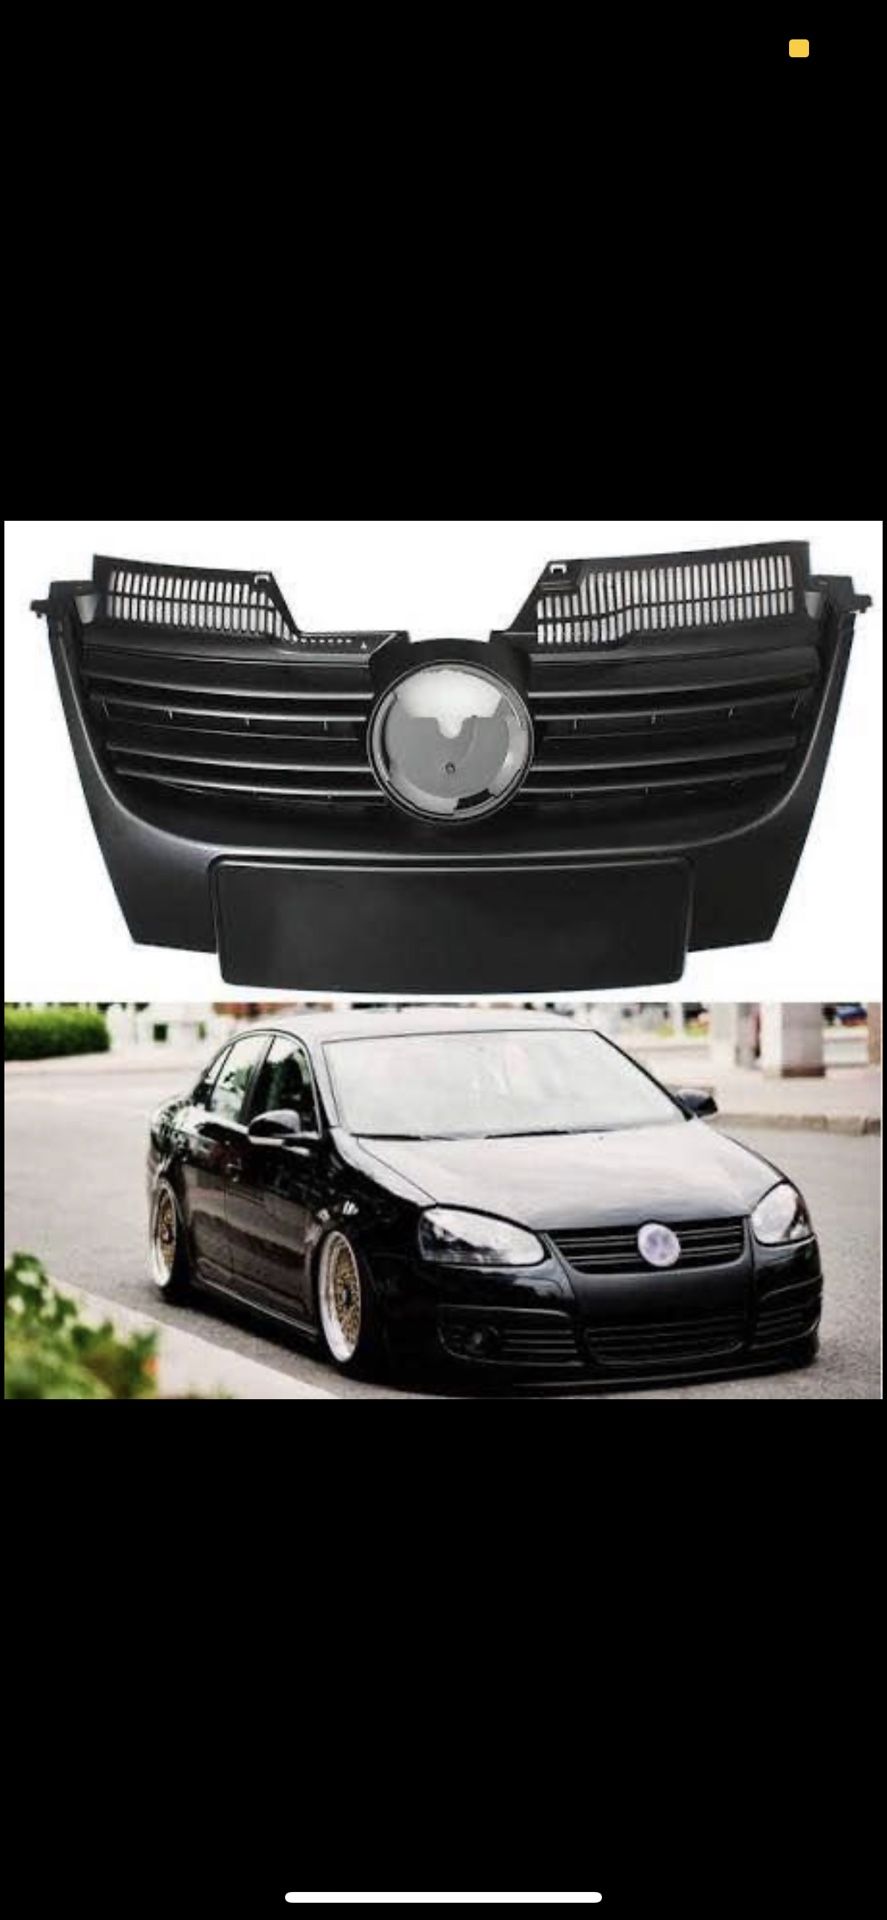 Volkswagen Jetta 2005-2010 parts (headlights,radio and grille)